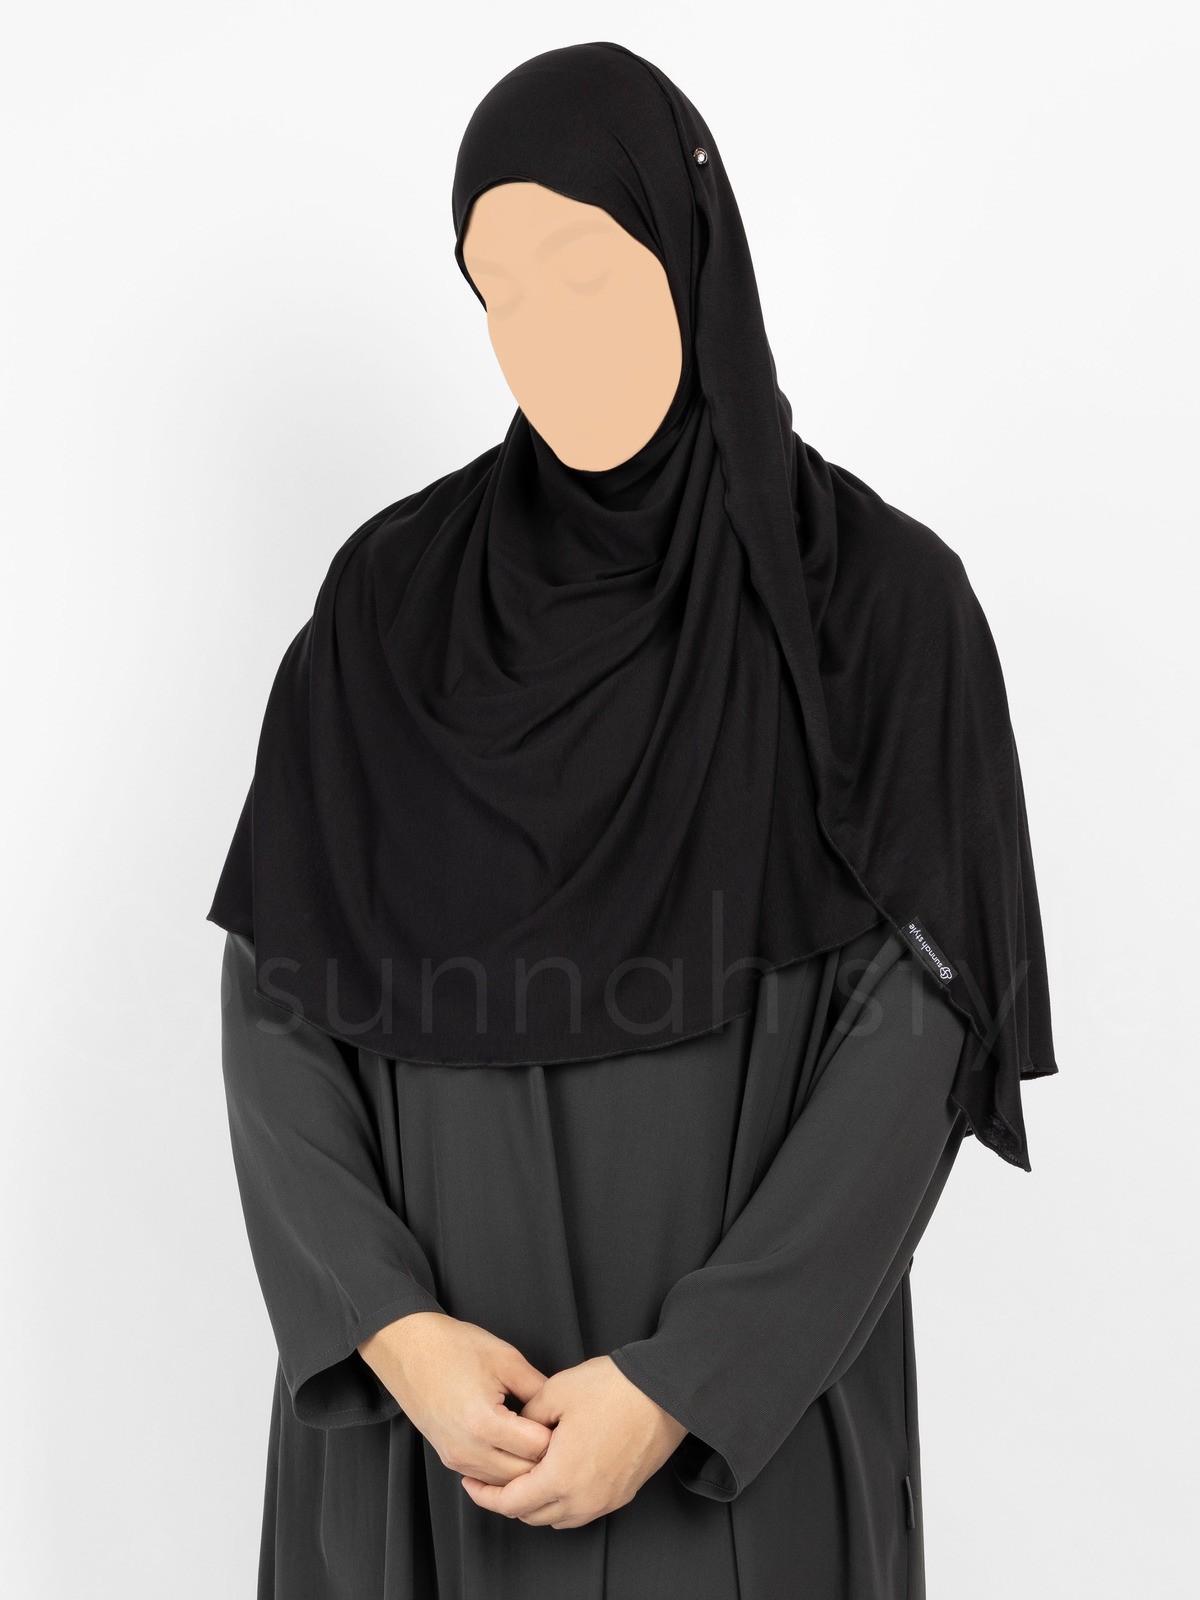 Sunnah Style Urban Shayla (Soft Jersey) - Large (Black)